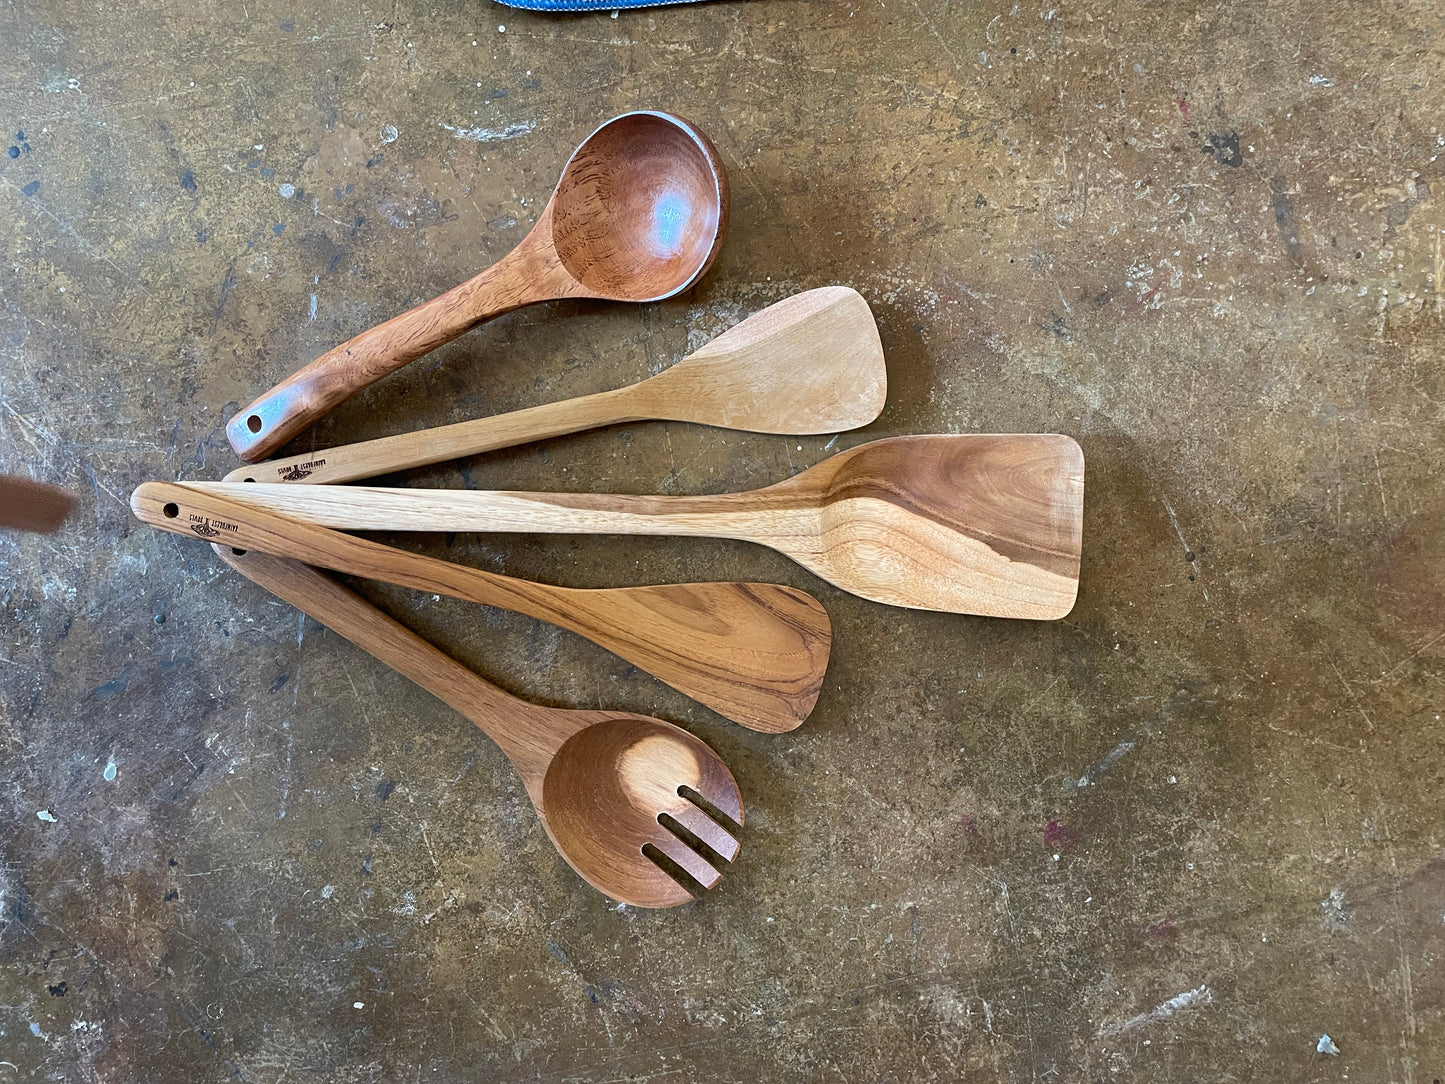 Teakwood serving utensils